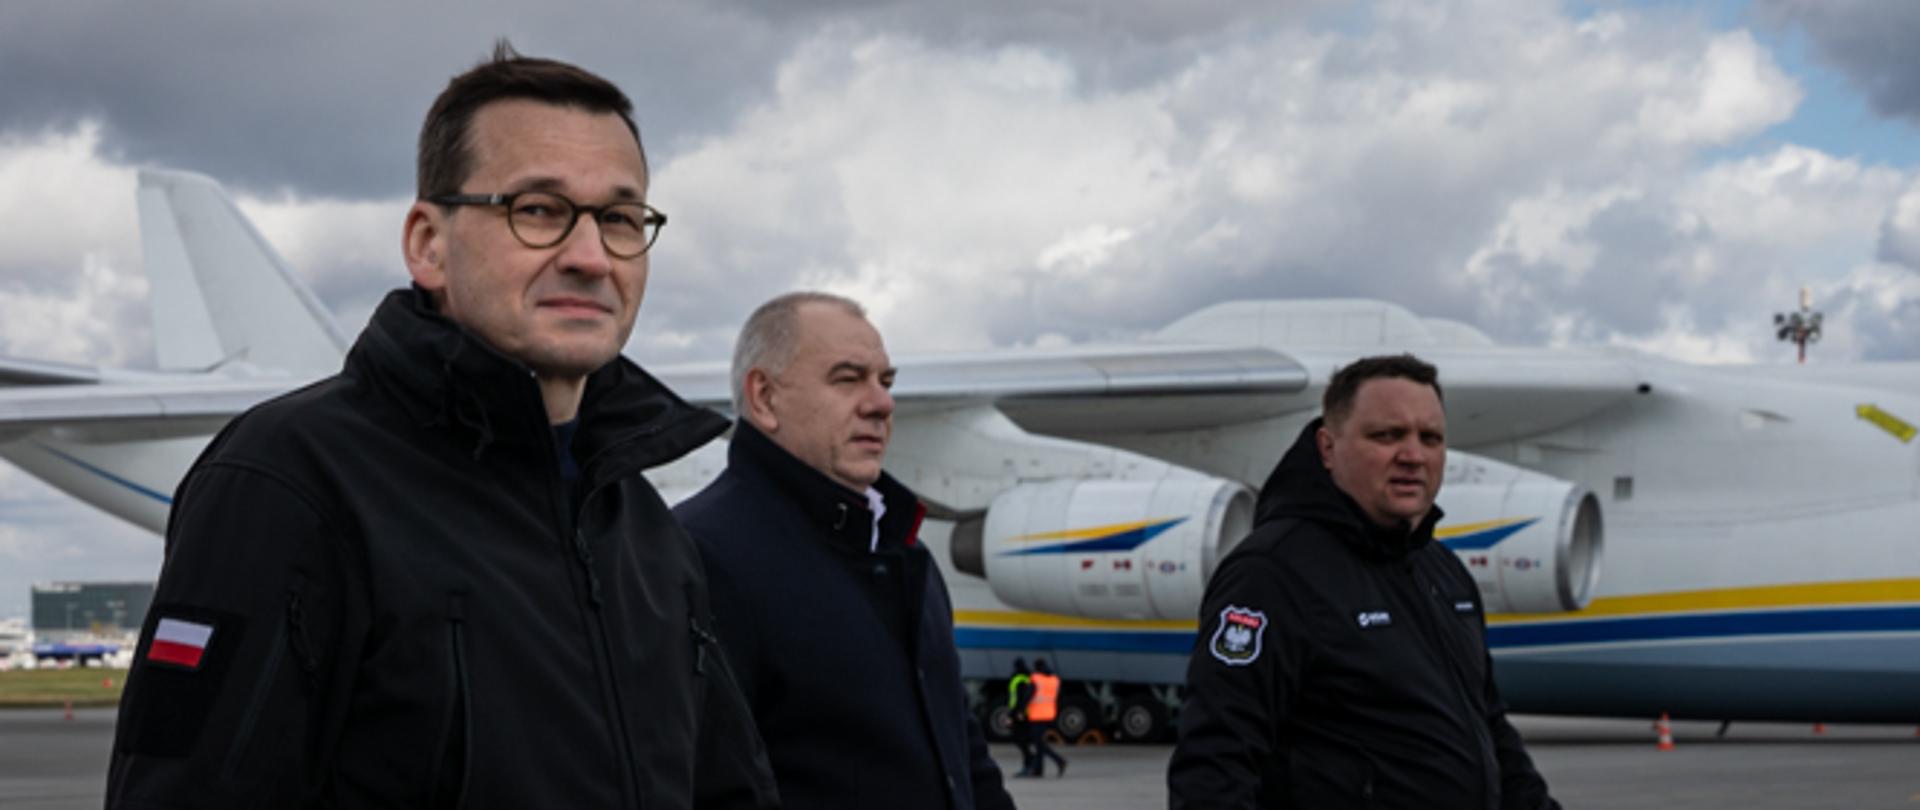 Premier Mateusz Morawiecki, Jacek Sasin i Marcin Chludziński idą na tle samolotu.